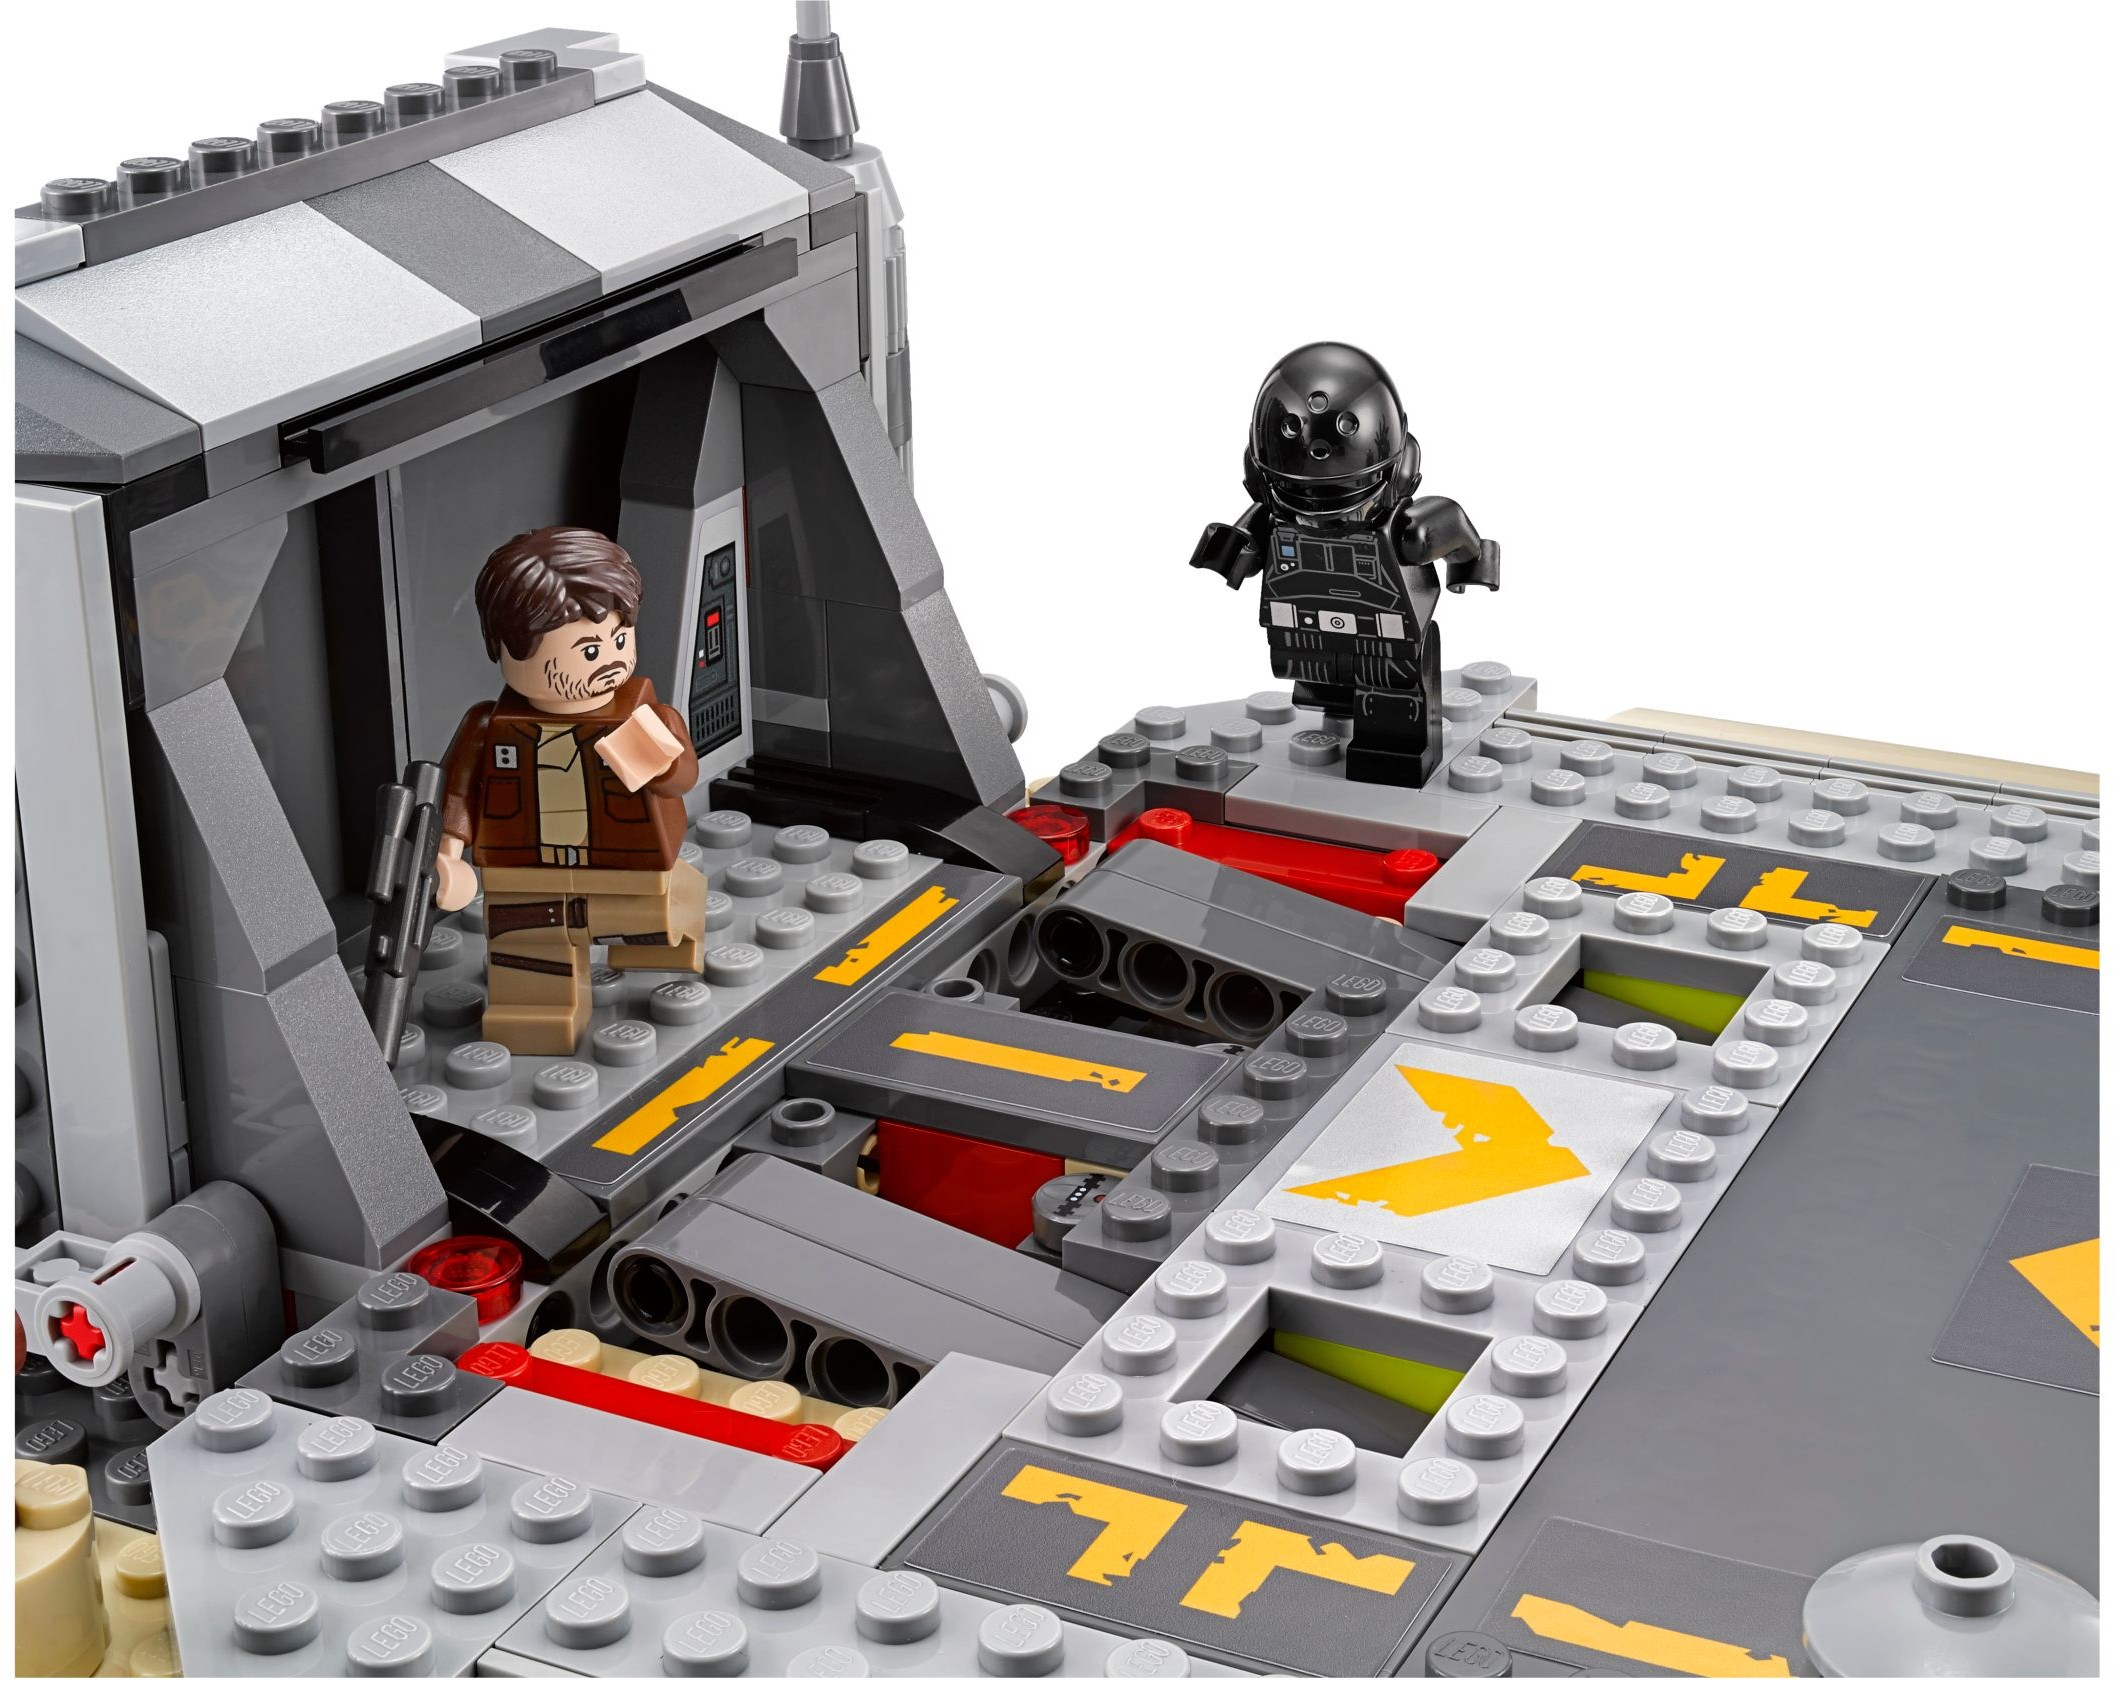 Lego 75171 Battle on Scarif - Lego Star Wars set sale best price